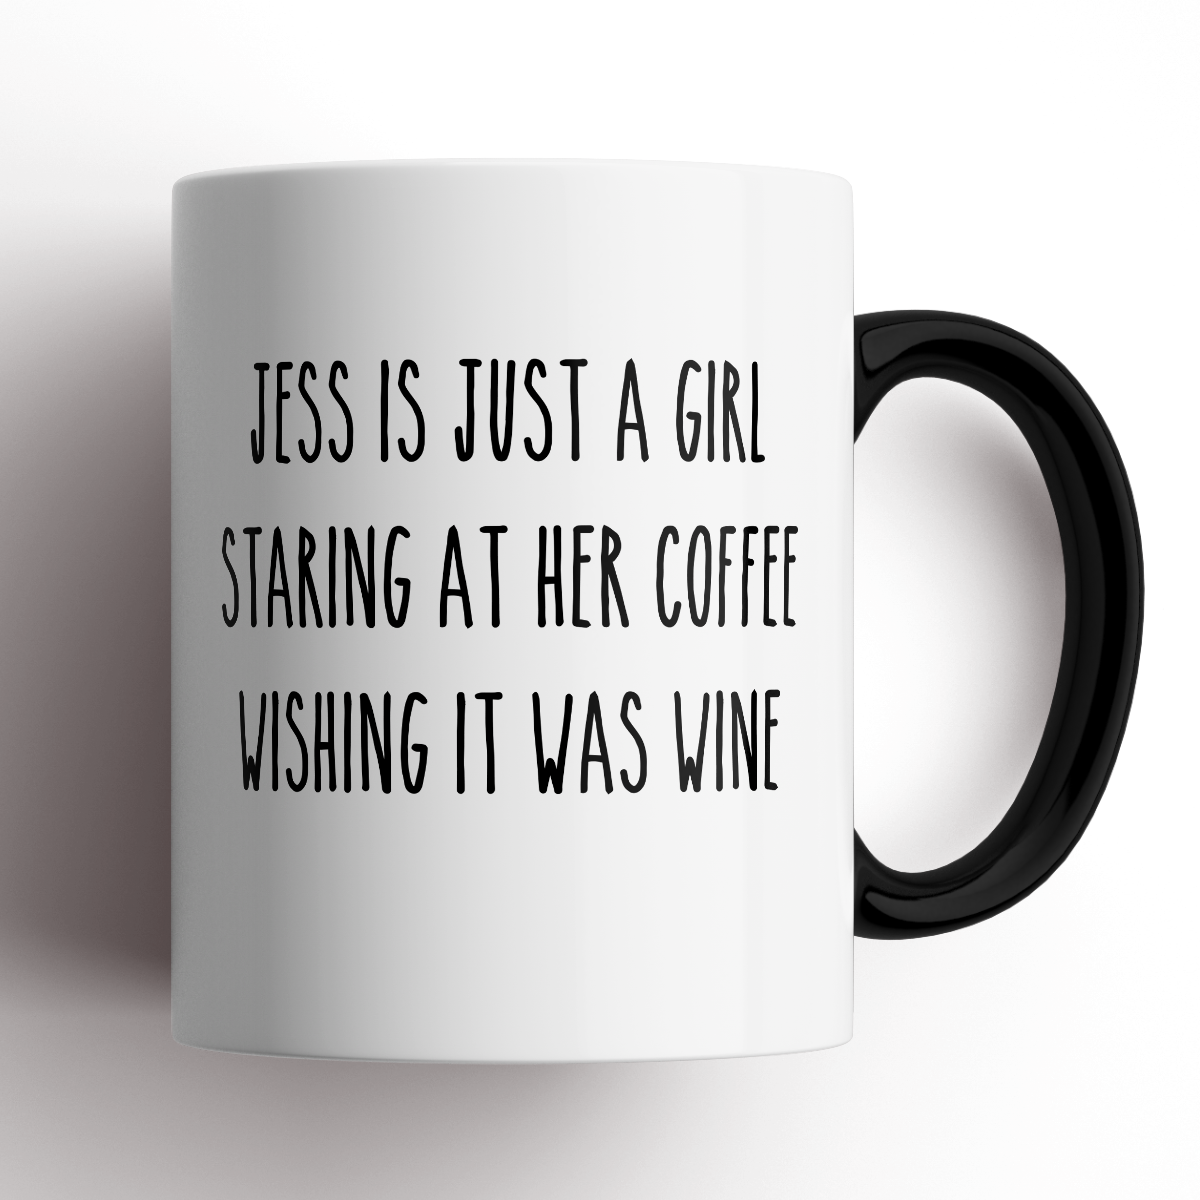 Jess Is Just A Girl Wishing her Coffee Was Wine Mug - ANY NAME